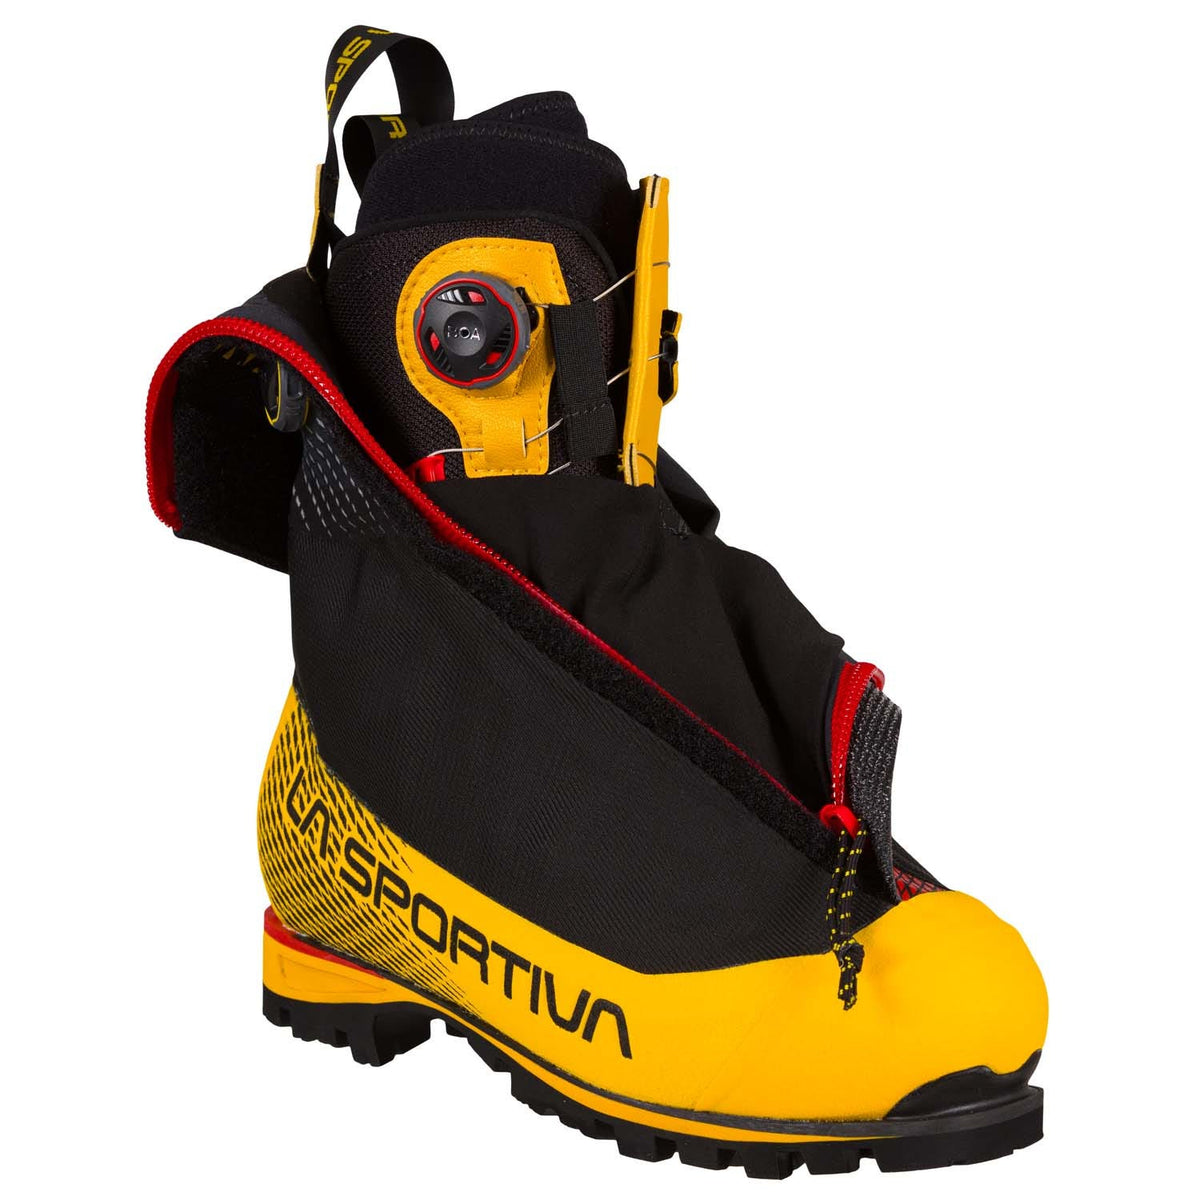 La Sportiva G2 Evo Mountaineering Boot, Inner Boot View